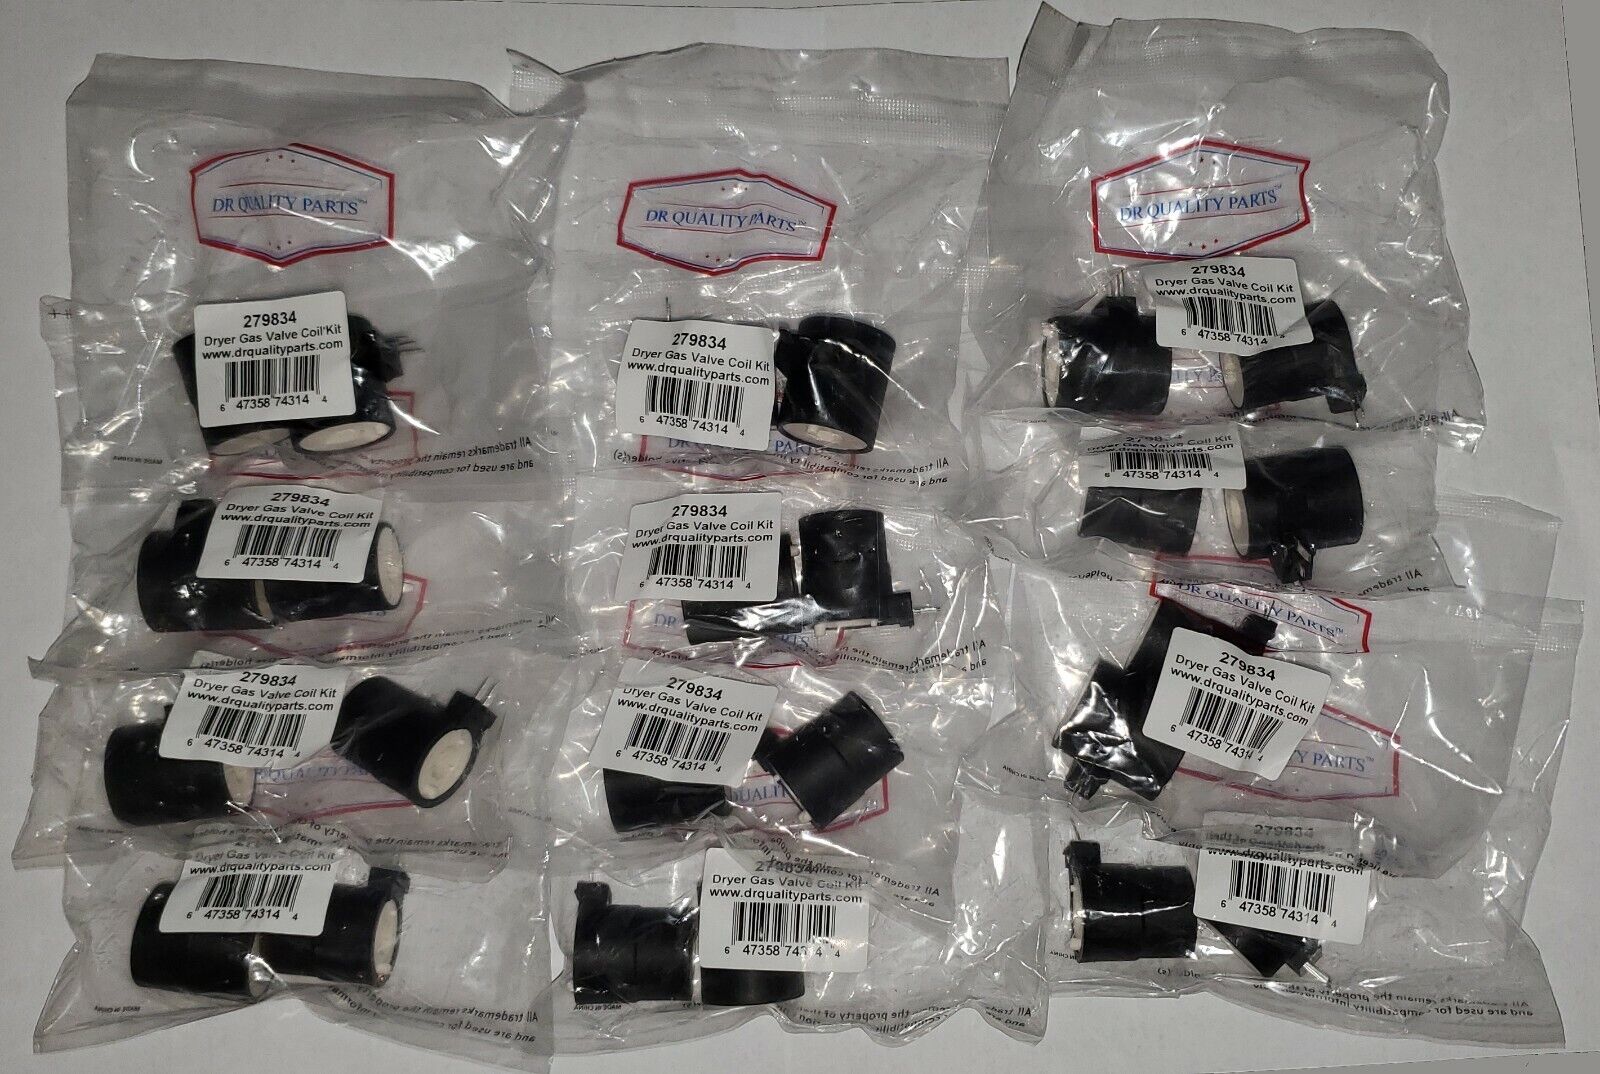 279834 Dryer Gas Coil Kit - Valve Ignition Solenoid For 16 Pack Bulk Wholesale DR Quality Parts DR 279834